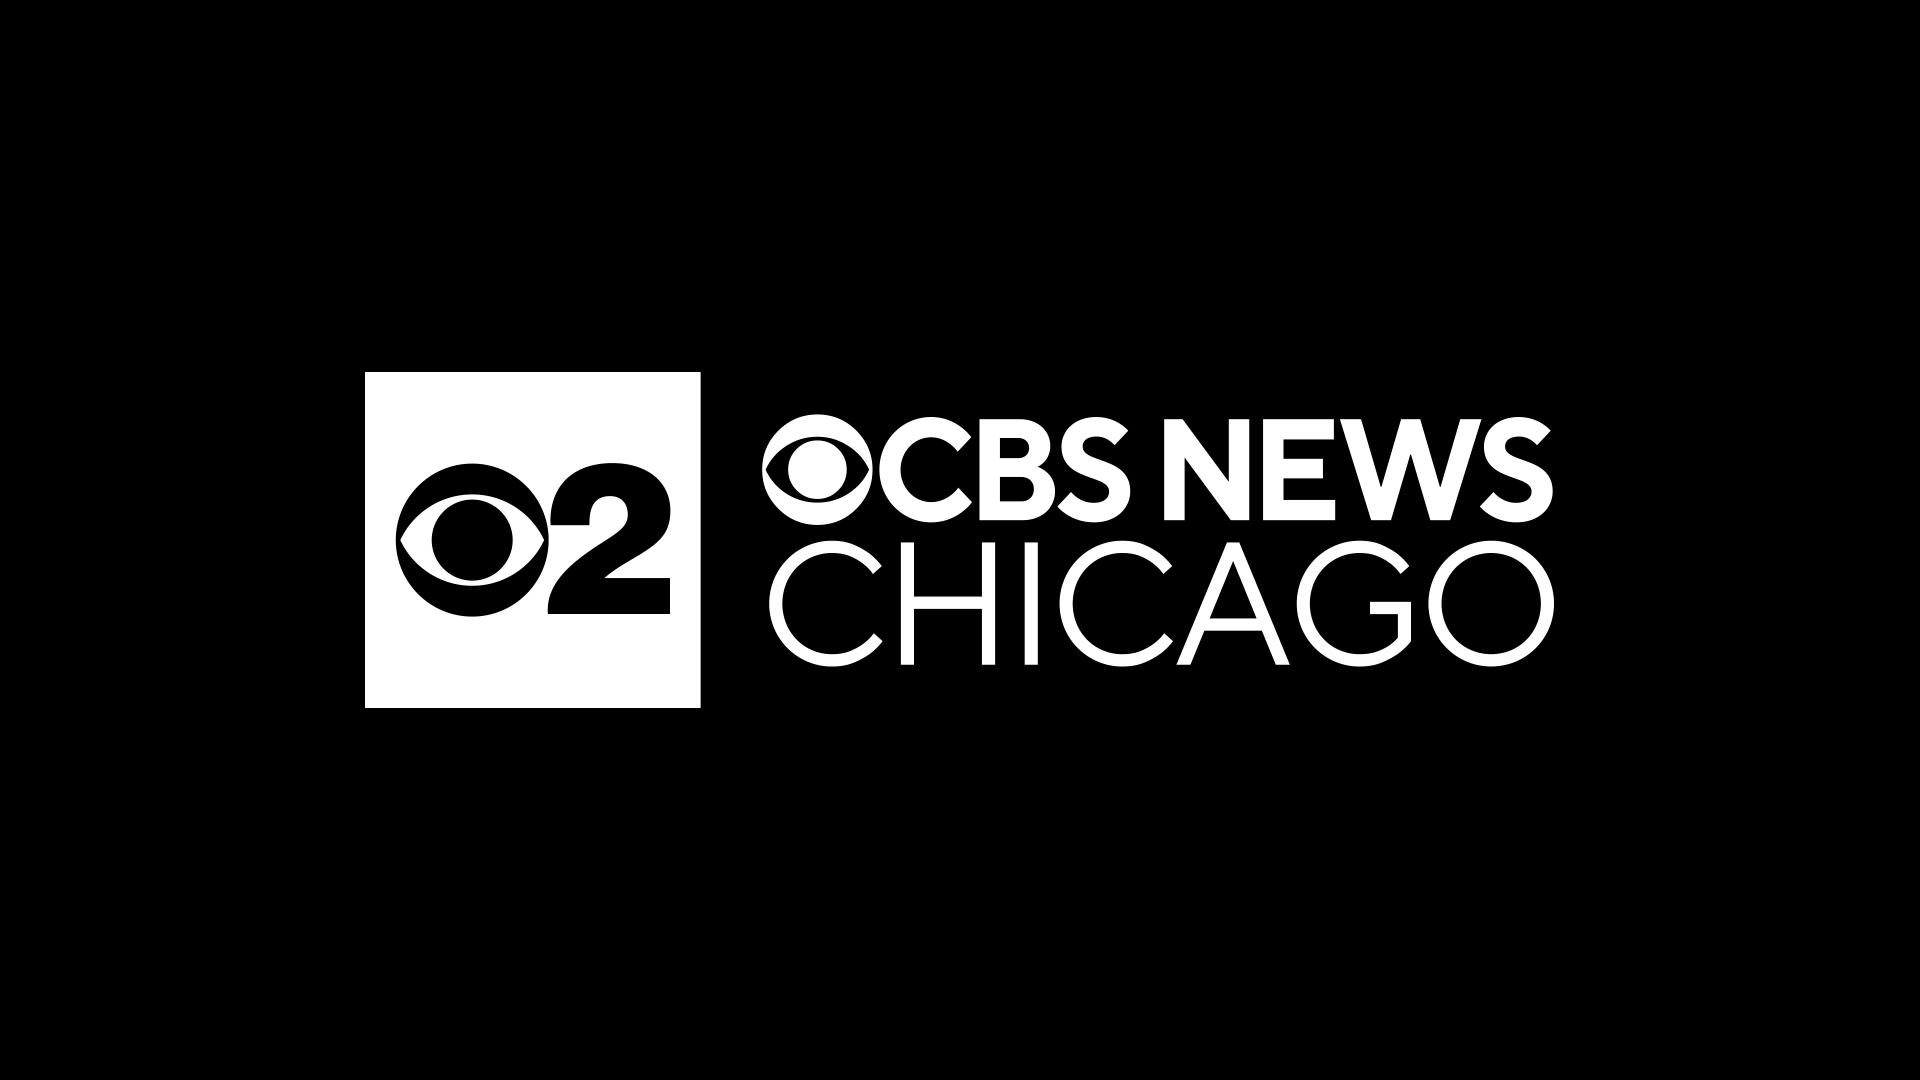 Breaking News from CBS2 CBS Chicago